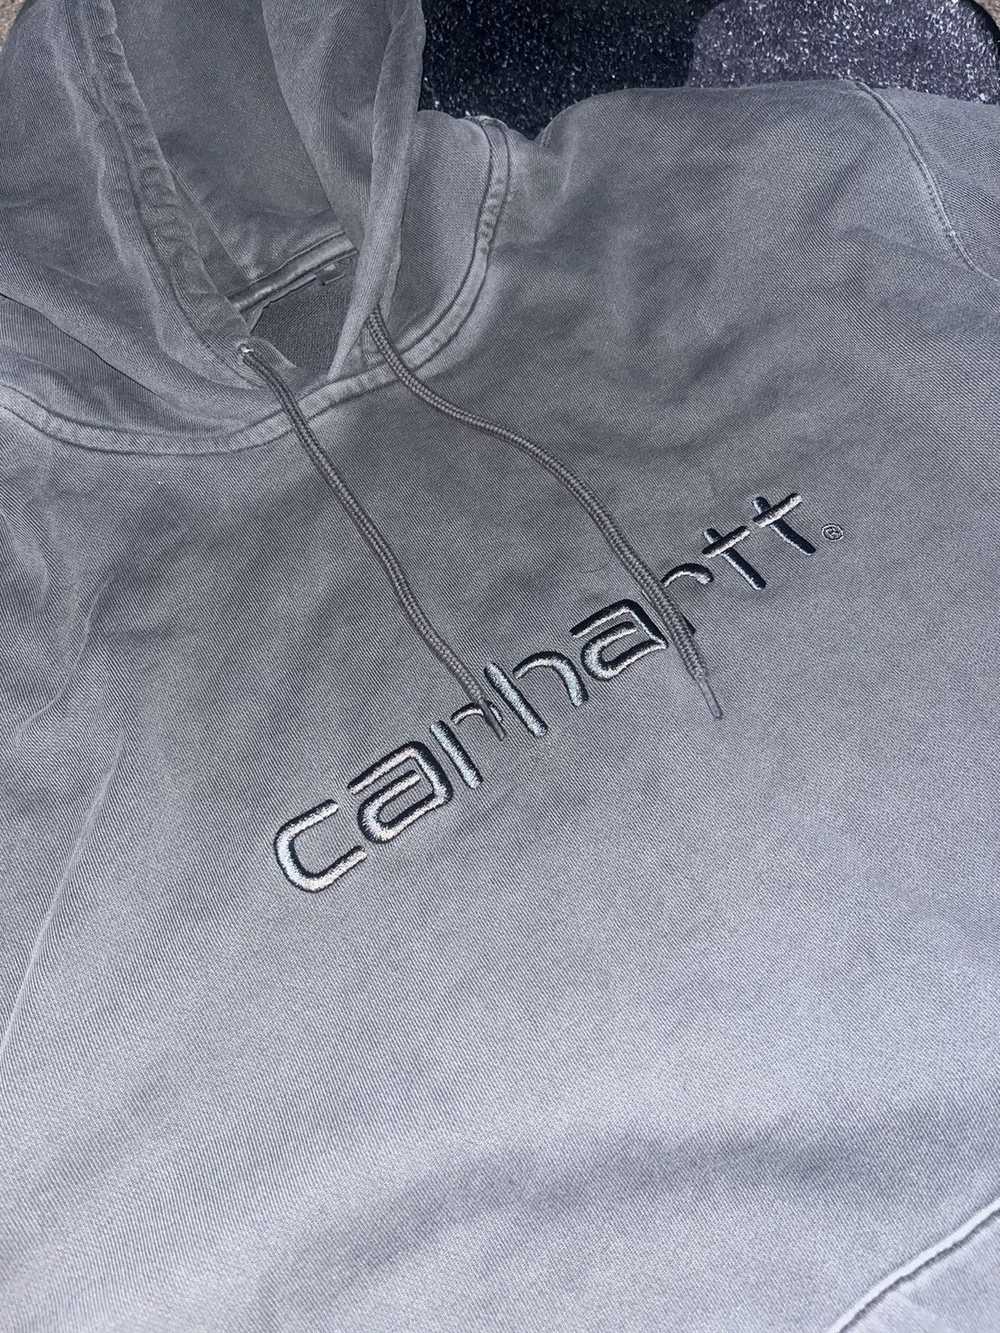 Carhartt CARHARTT GRAY HOODIE - XXL - image 1